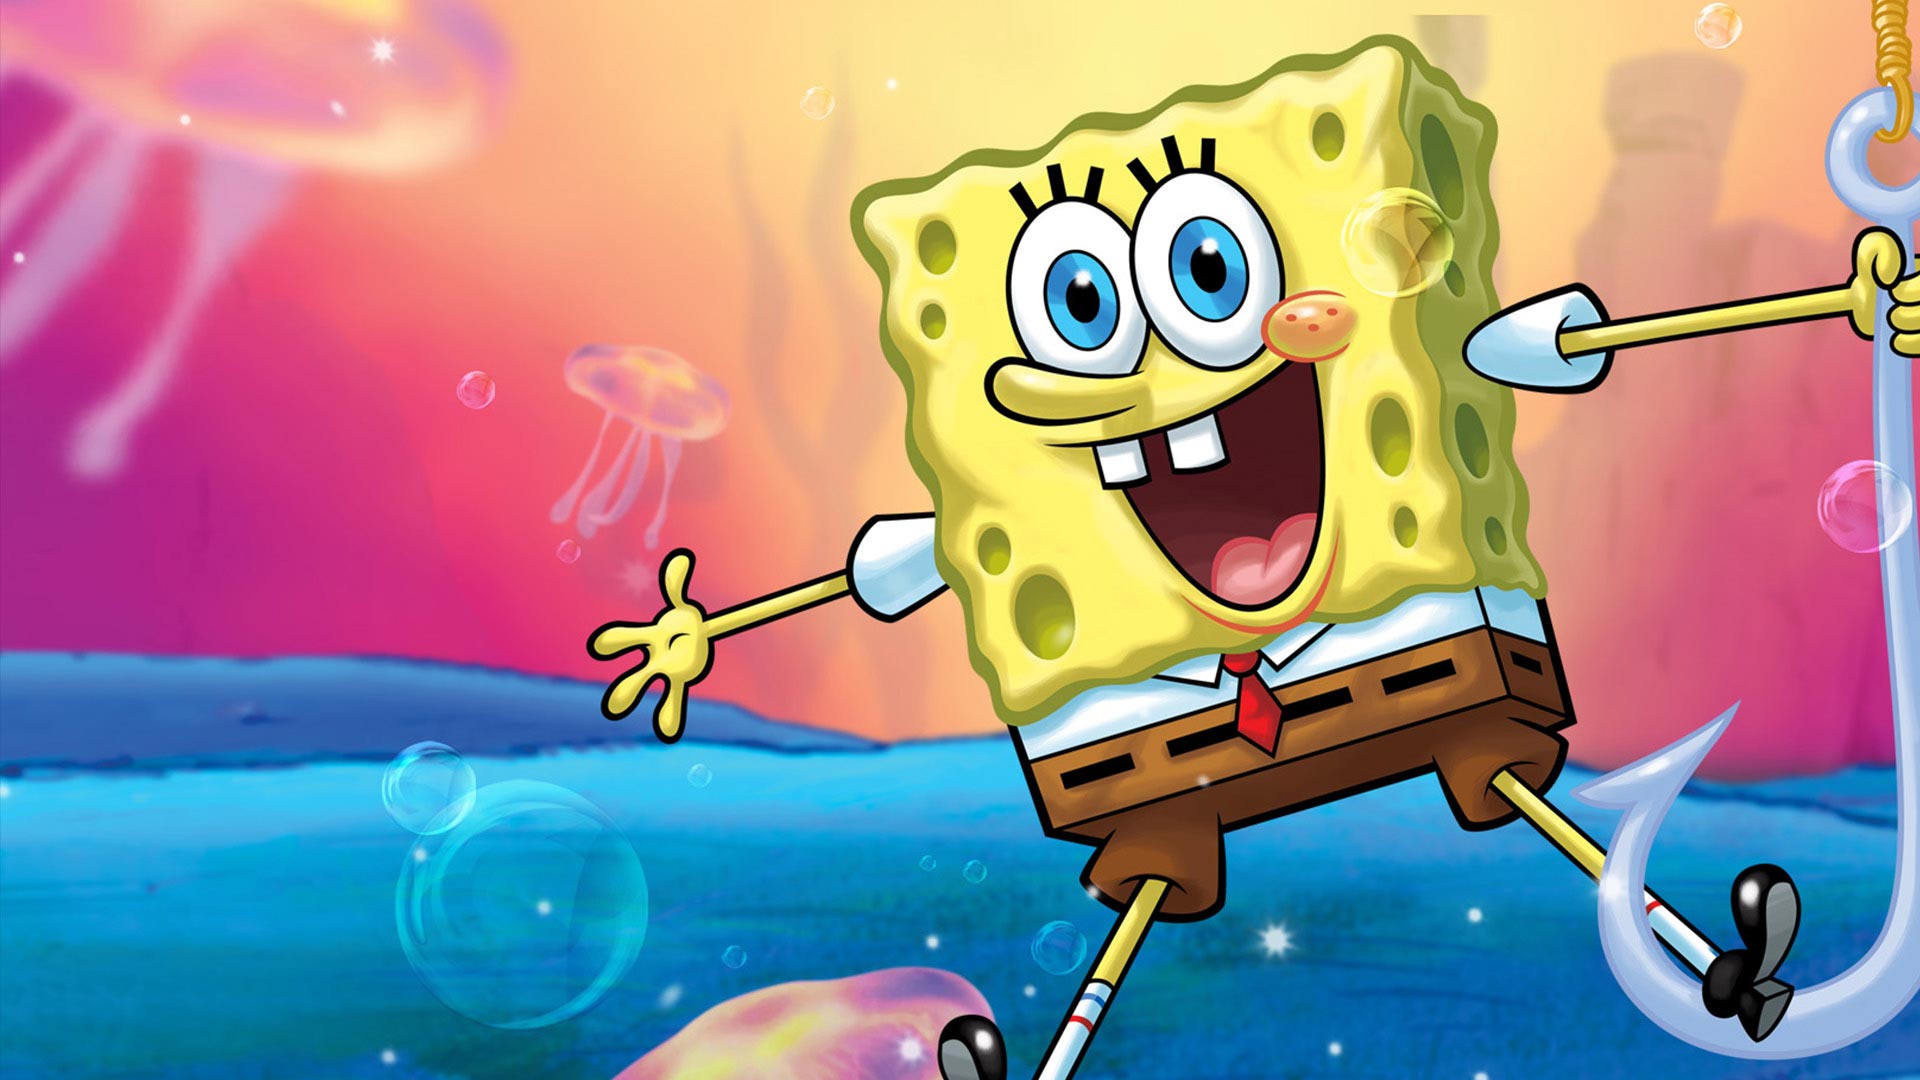 watch online spongebob squarepants episodes free